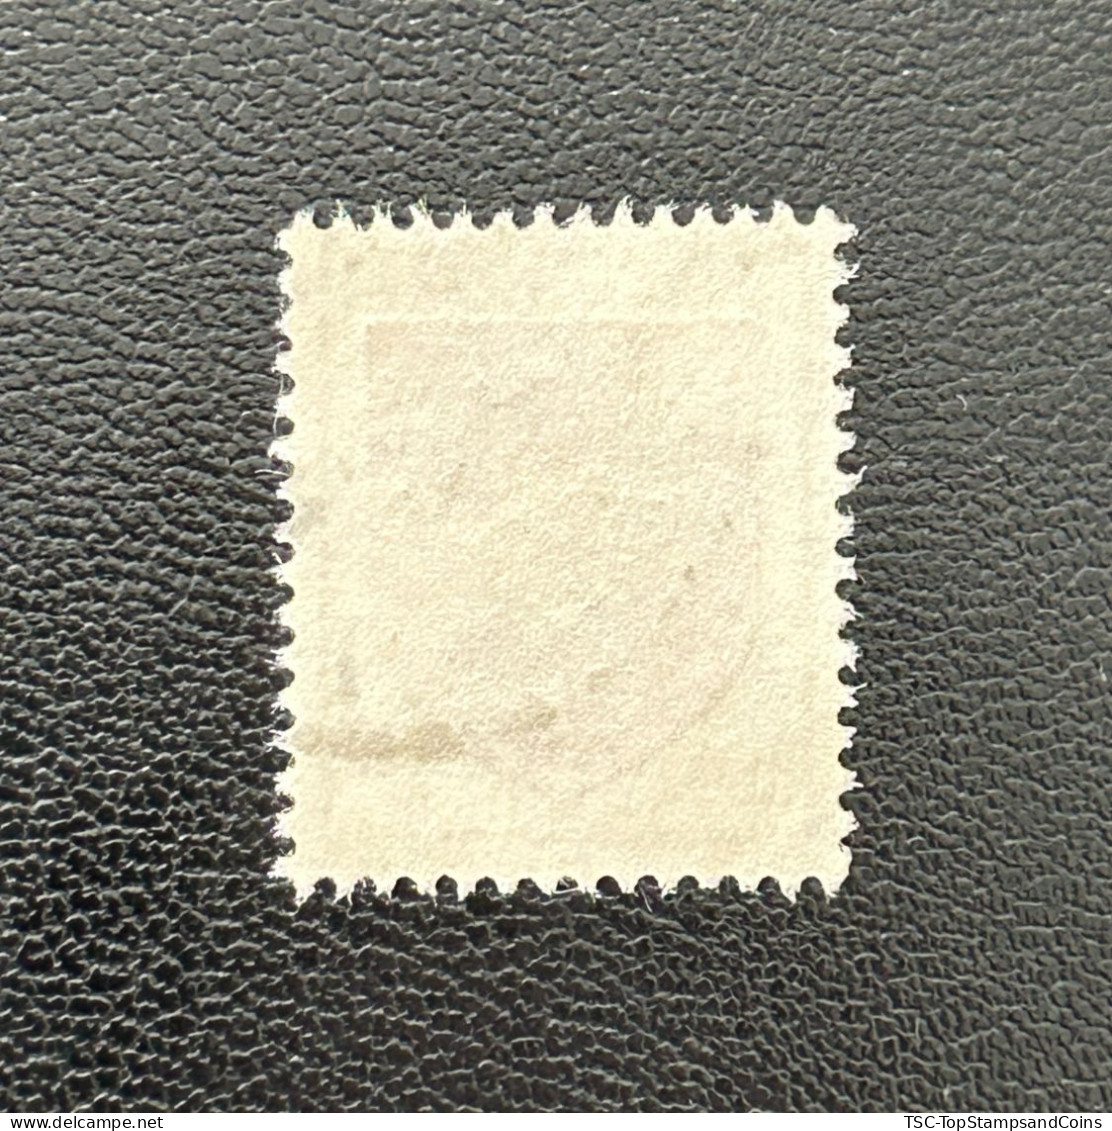 FRA1004U7 - Armoiries De Provinces (VII) - Aunis - 3 F Used Stamp - 1954 - France YT 1004 - 1941-66 Escudos Y Blasones